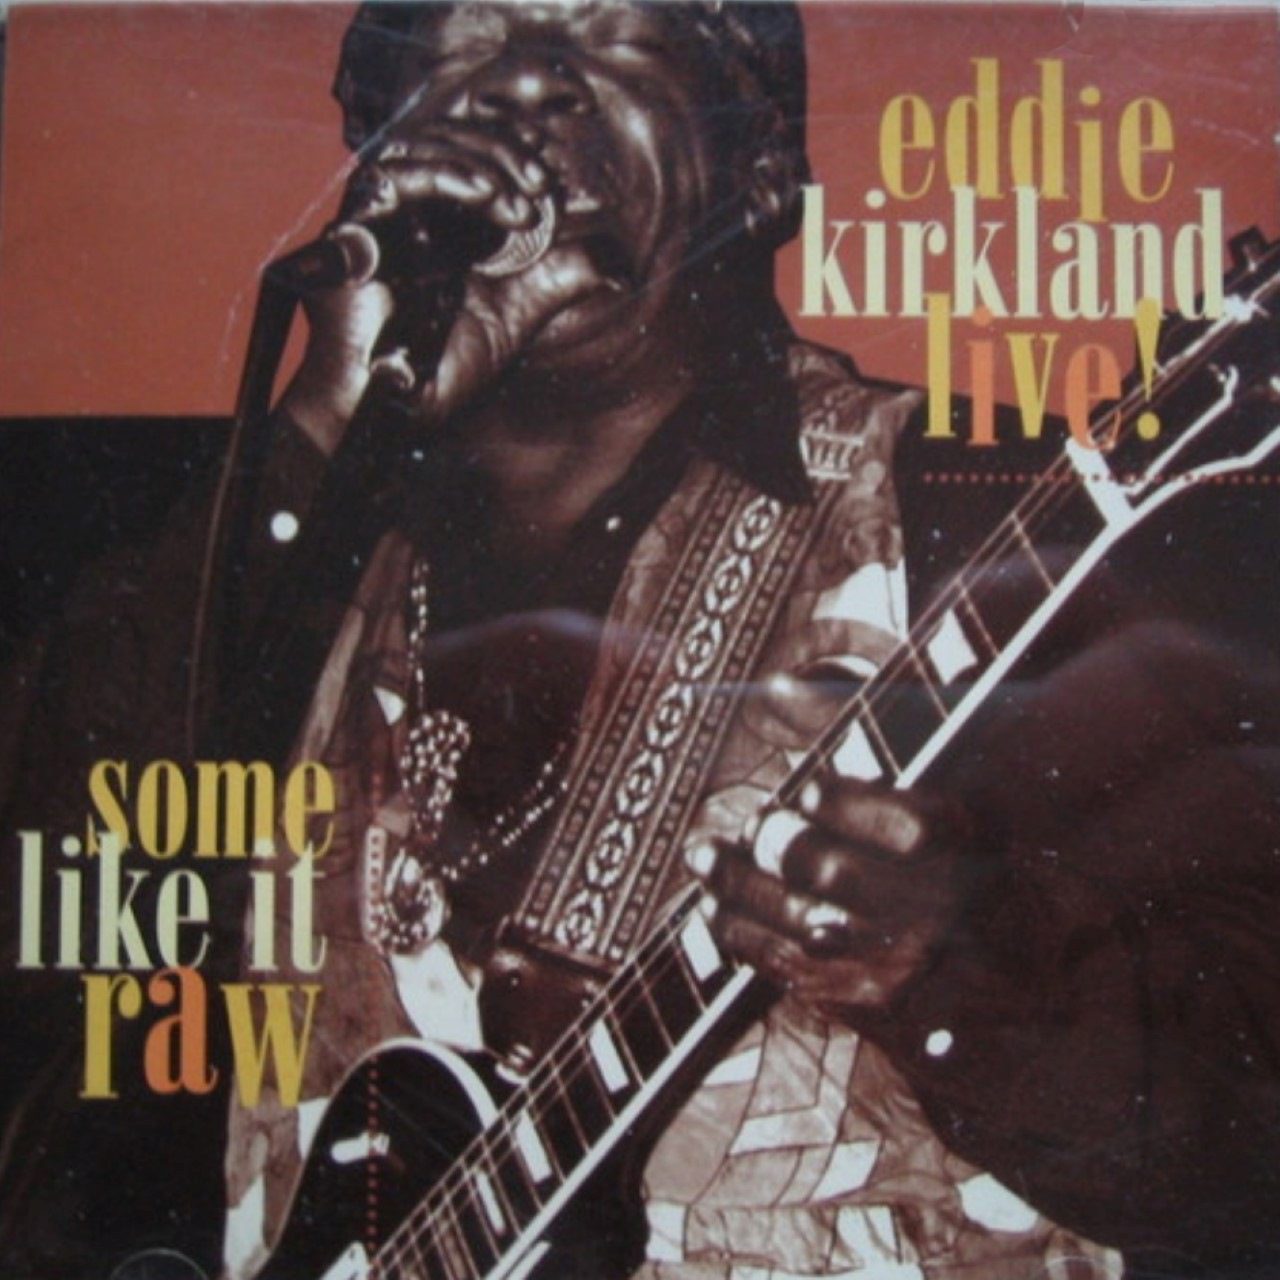 Eddie Kirkland – Some Like It Raw cover album